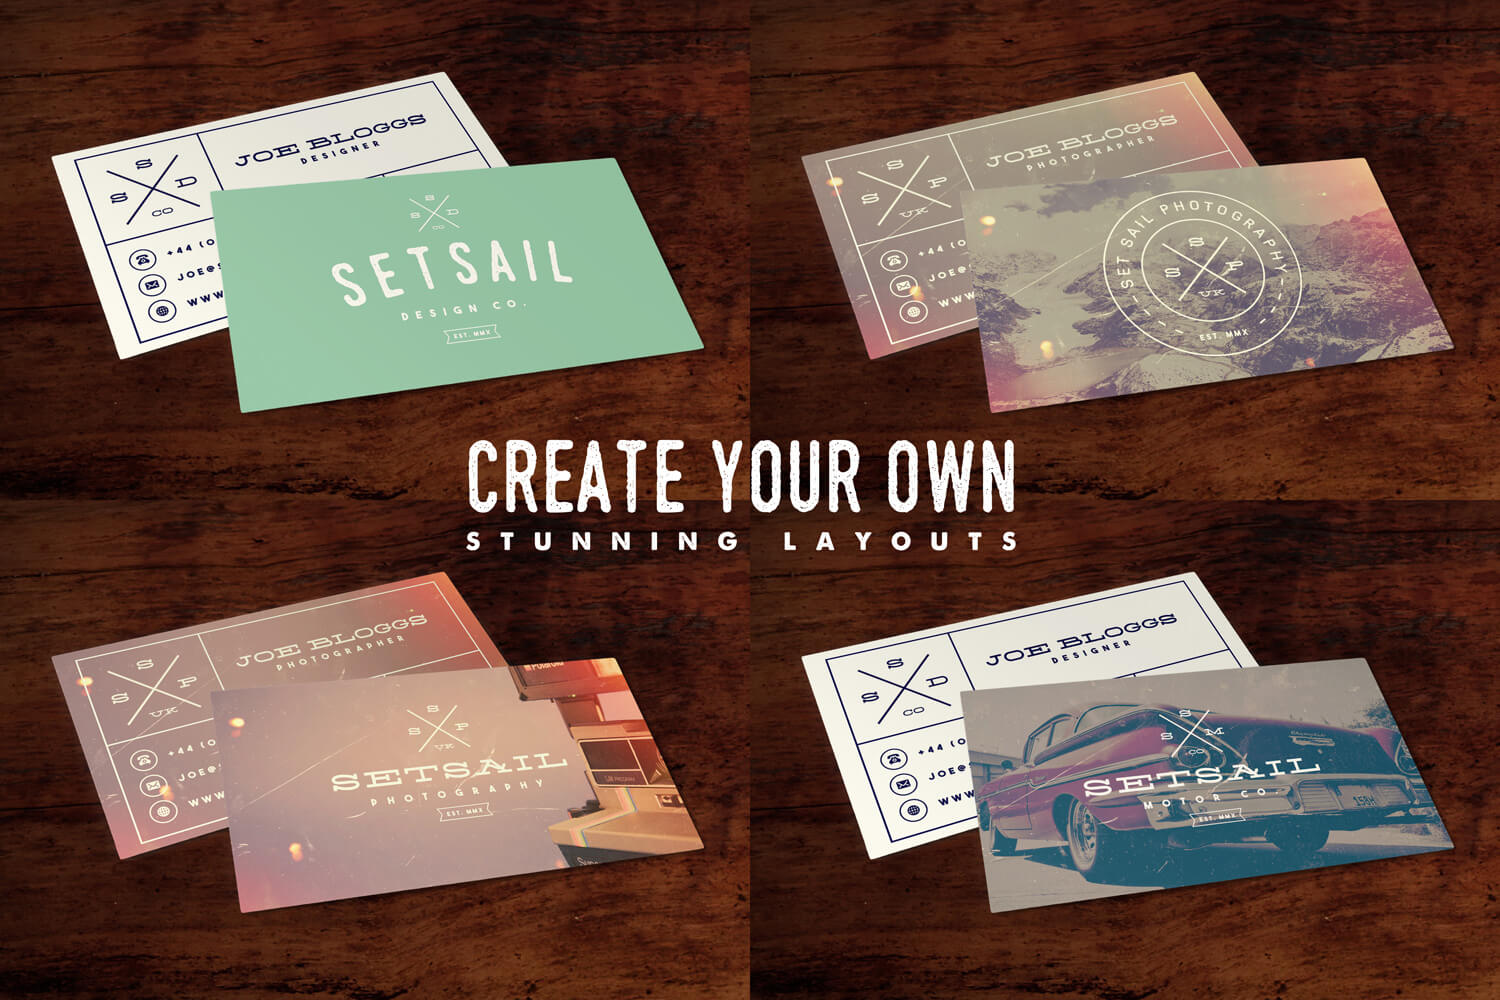 Set Sail Studios Vintage Business Card Template Inside Staples Business Card Template Word